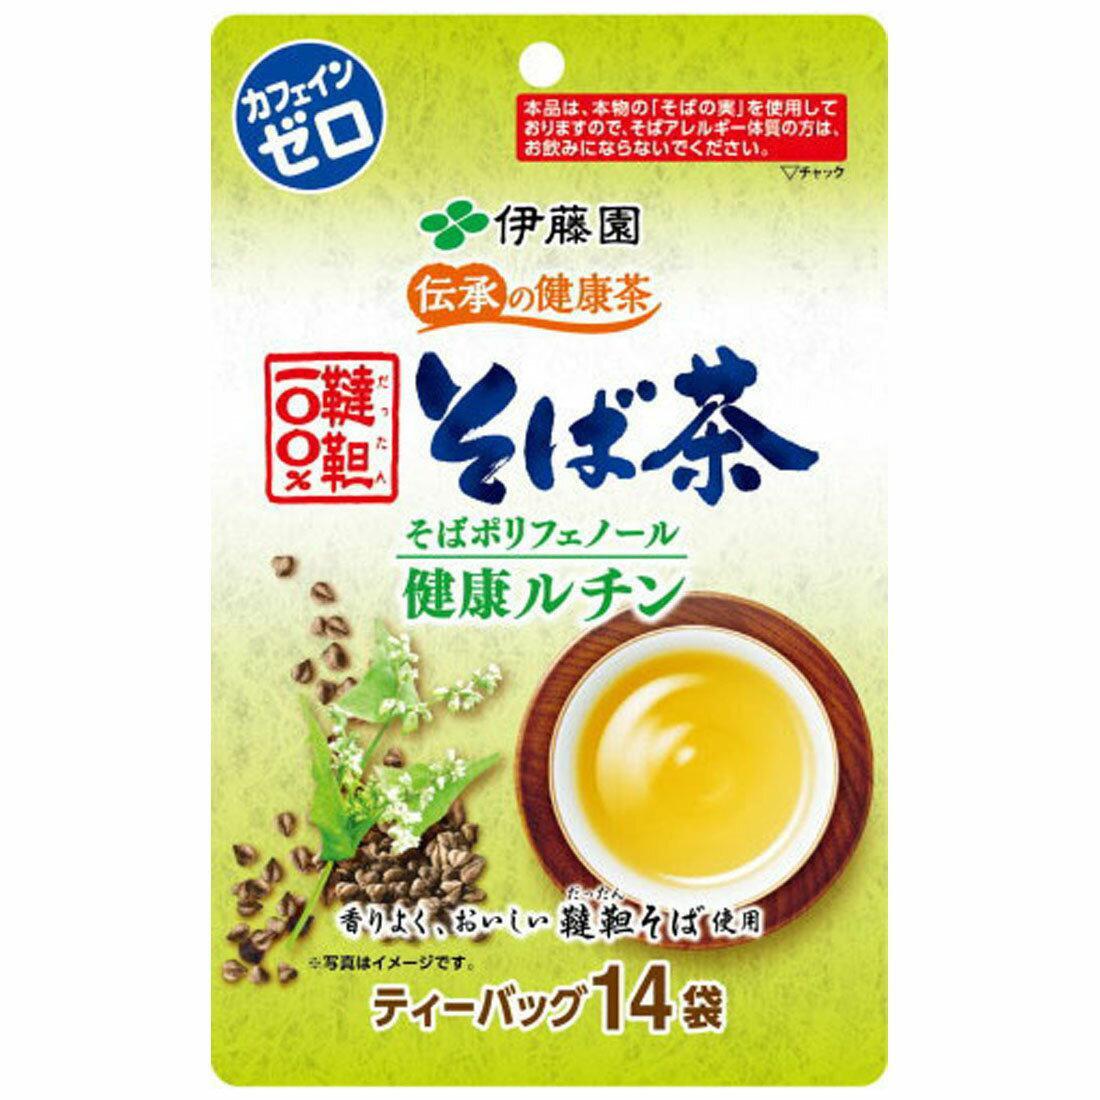 Itoen Sobacha Decaffeinated Tartary Buckwheat Tea Bags 14 ct.